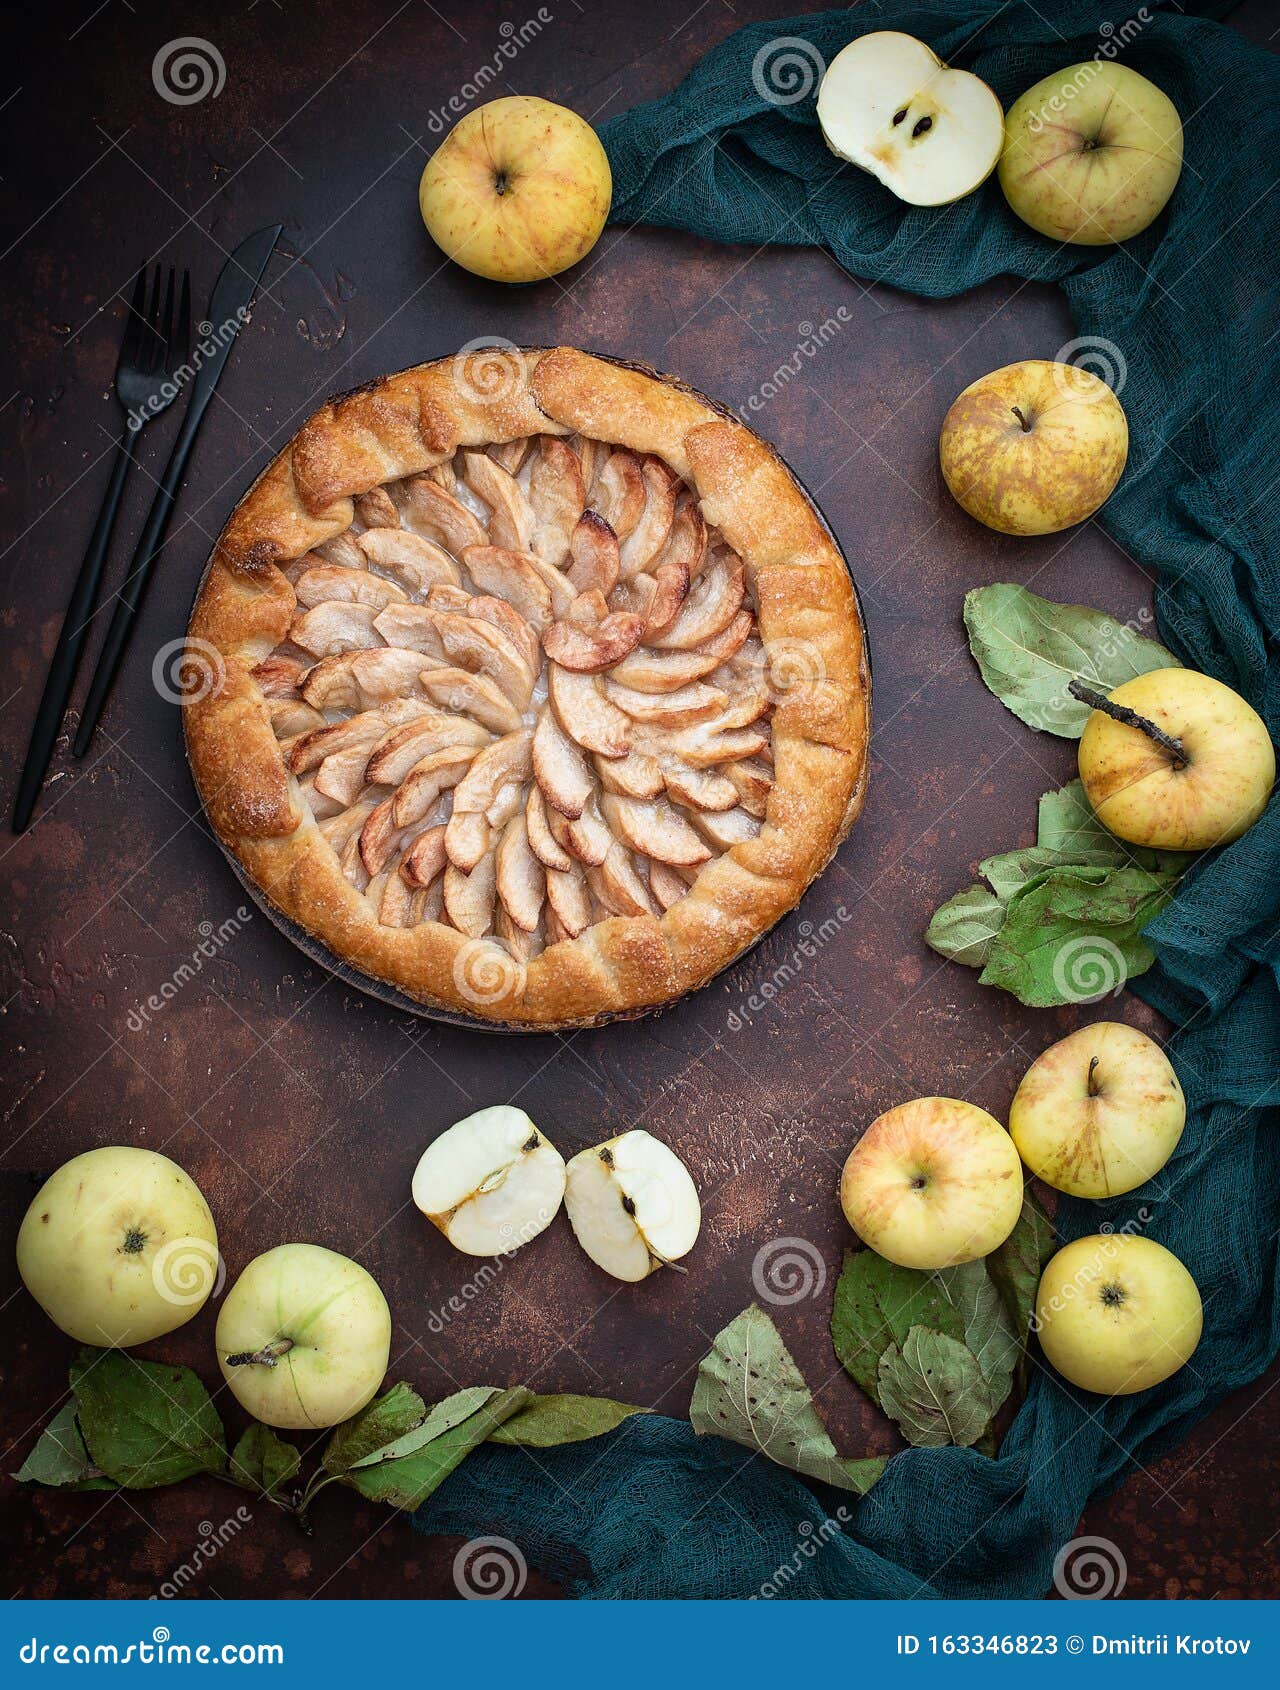 open apple pie, galleta. around - fresh apples and green leaves